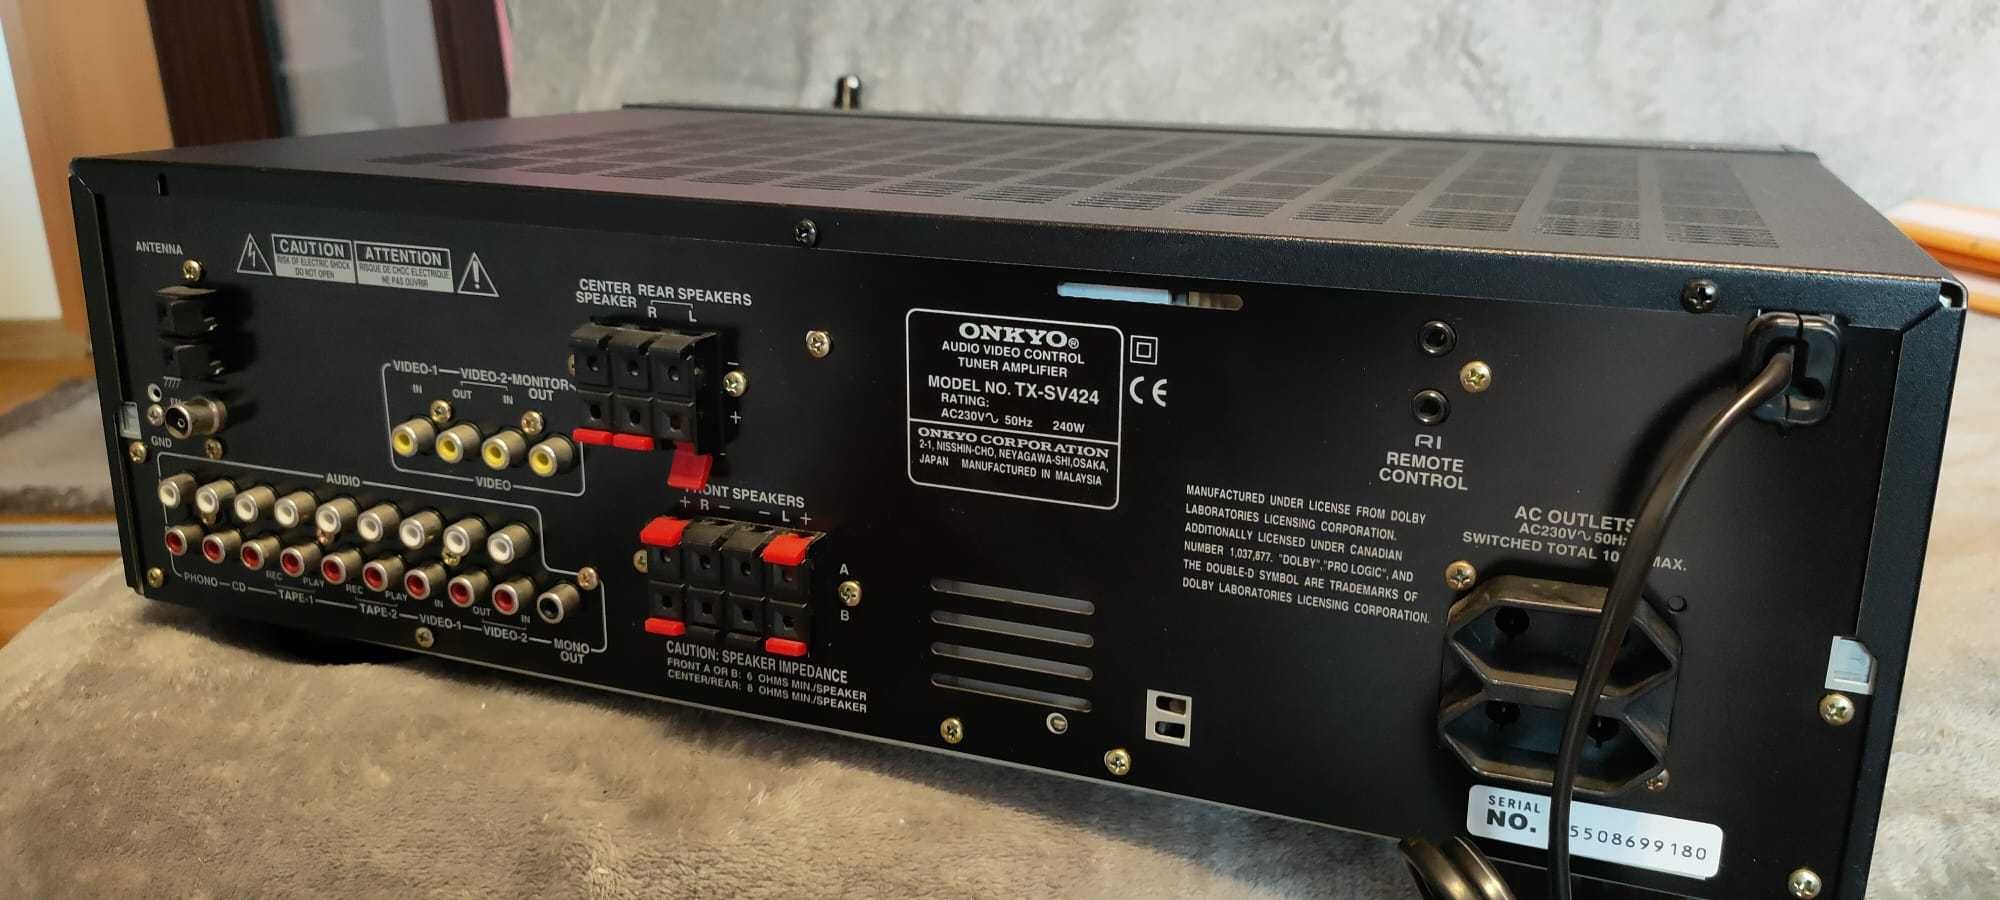 Onkyo TX-SV 424 AV receiver